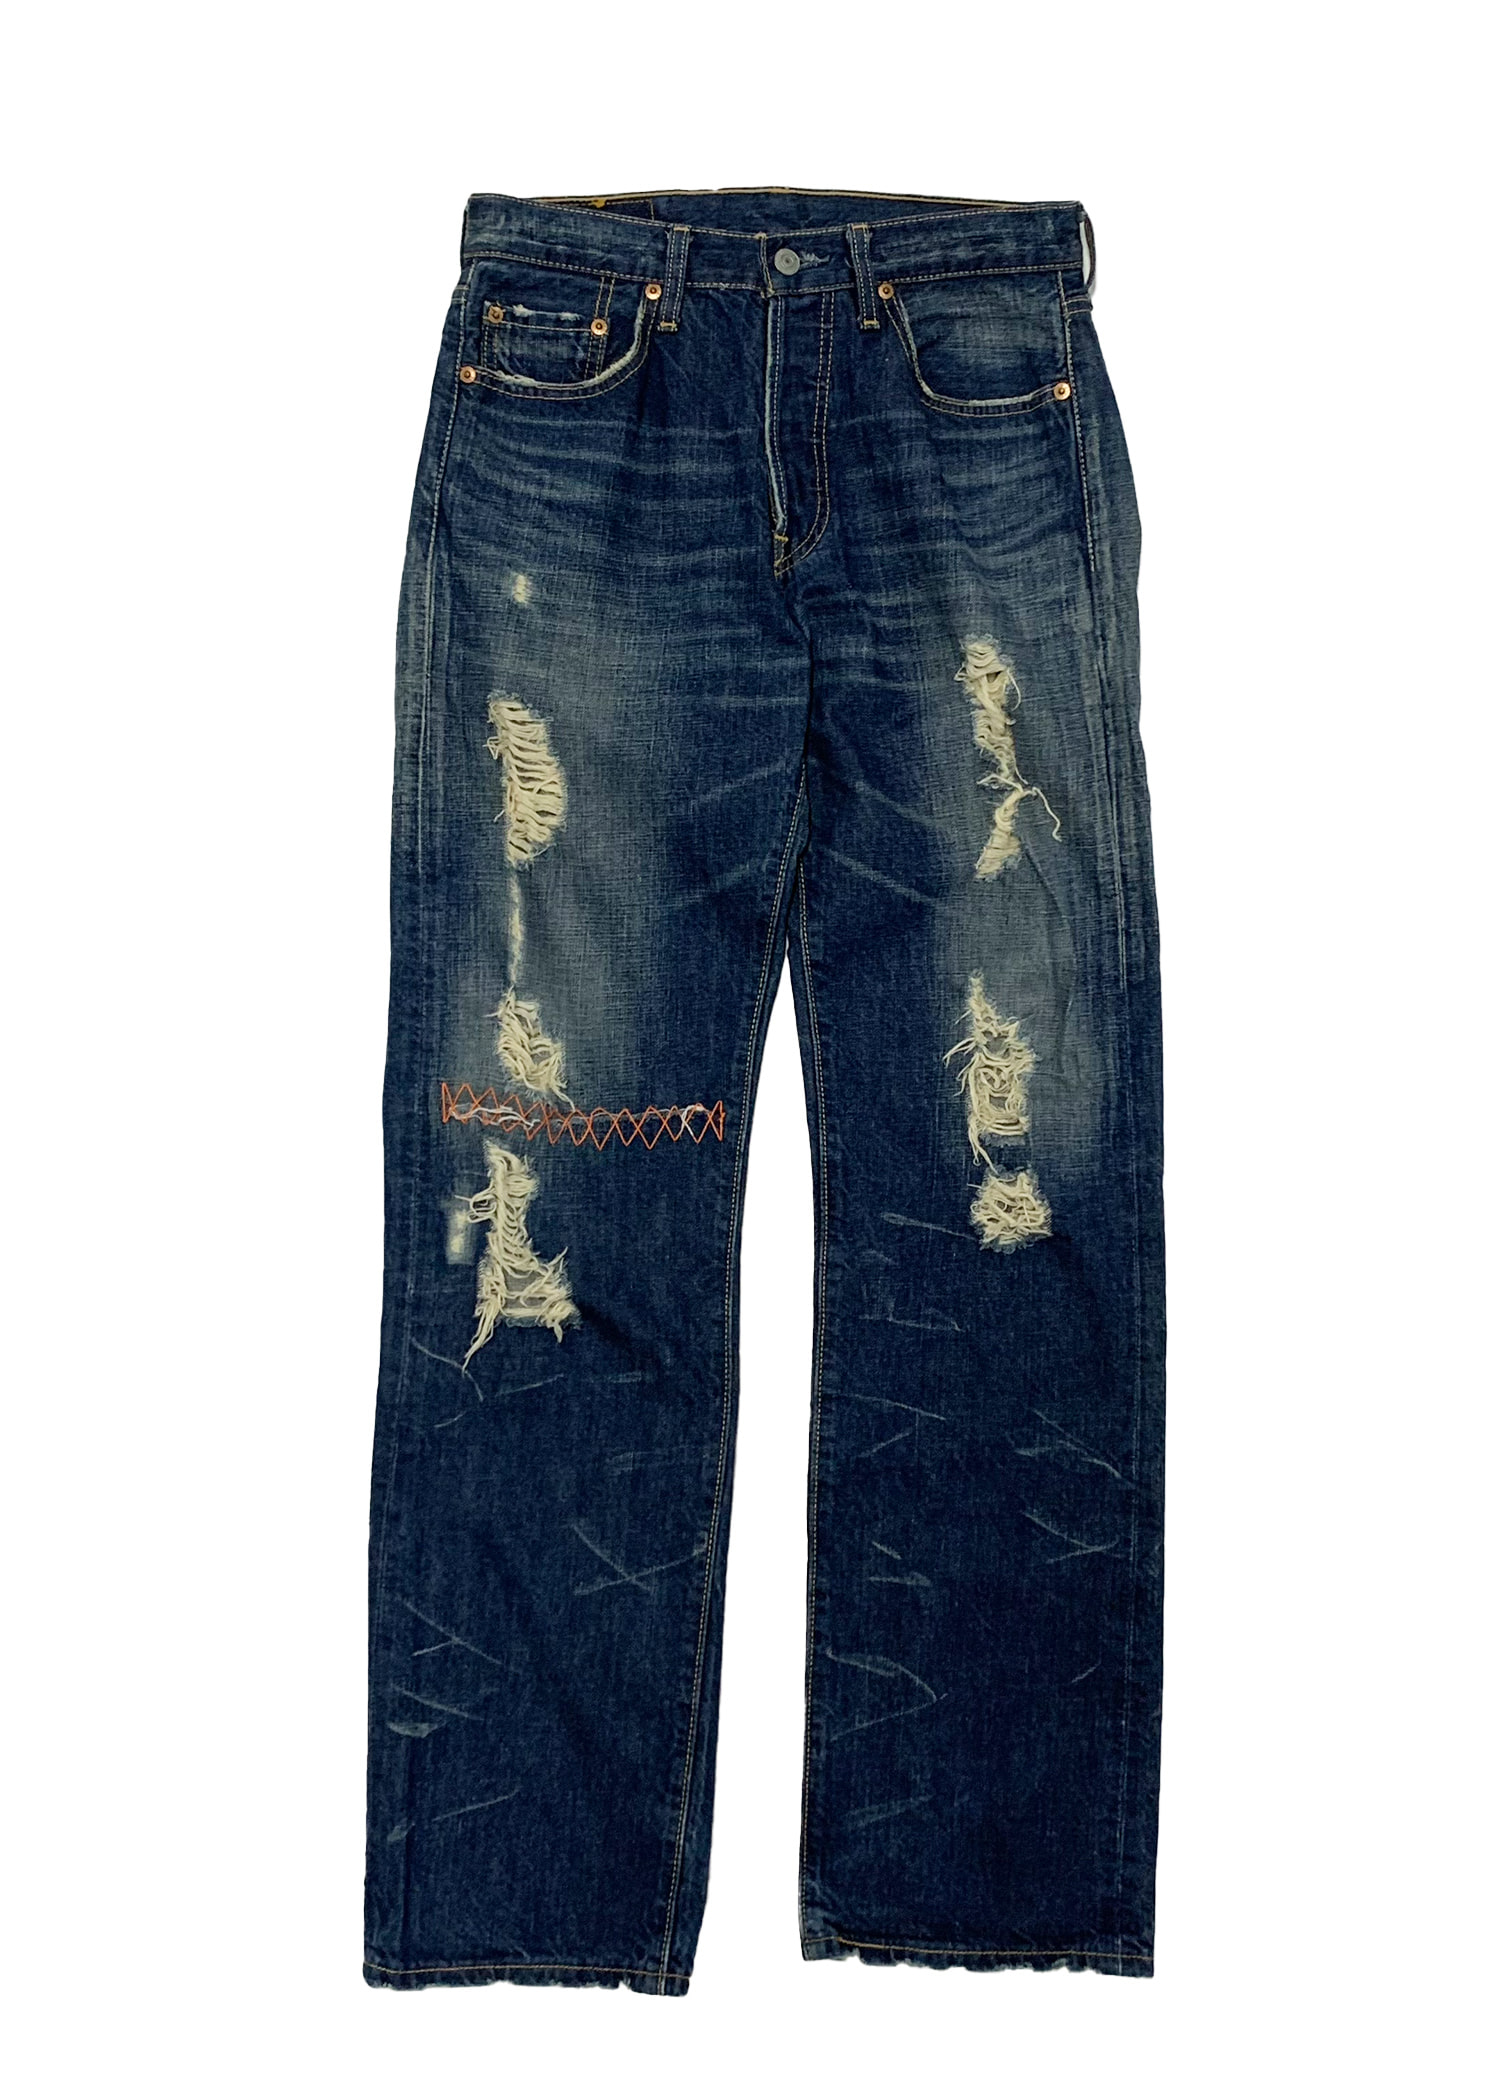 remake Levis 501 jeans